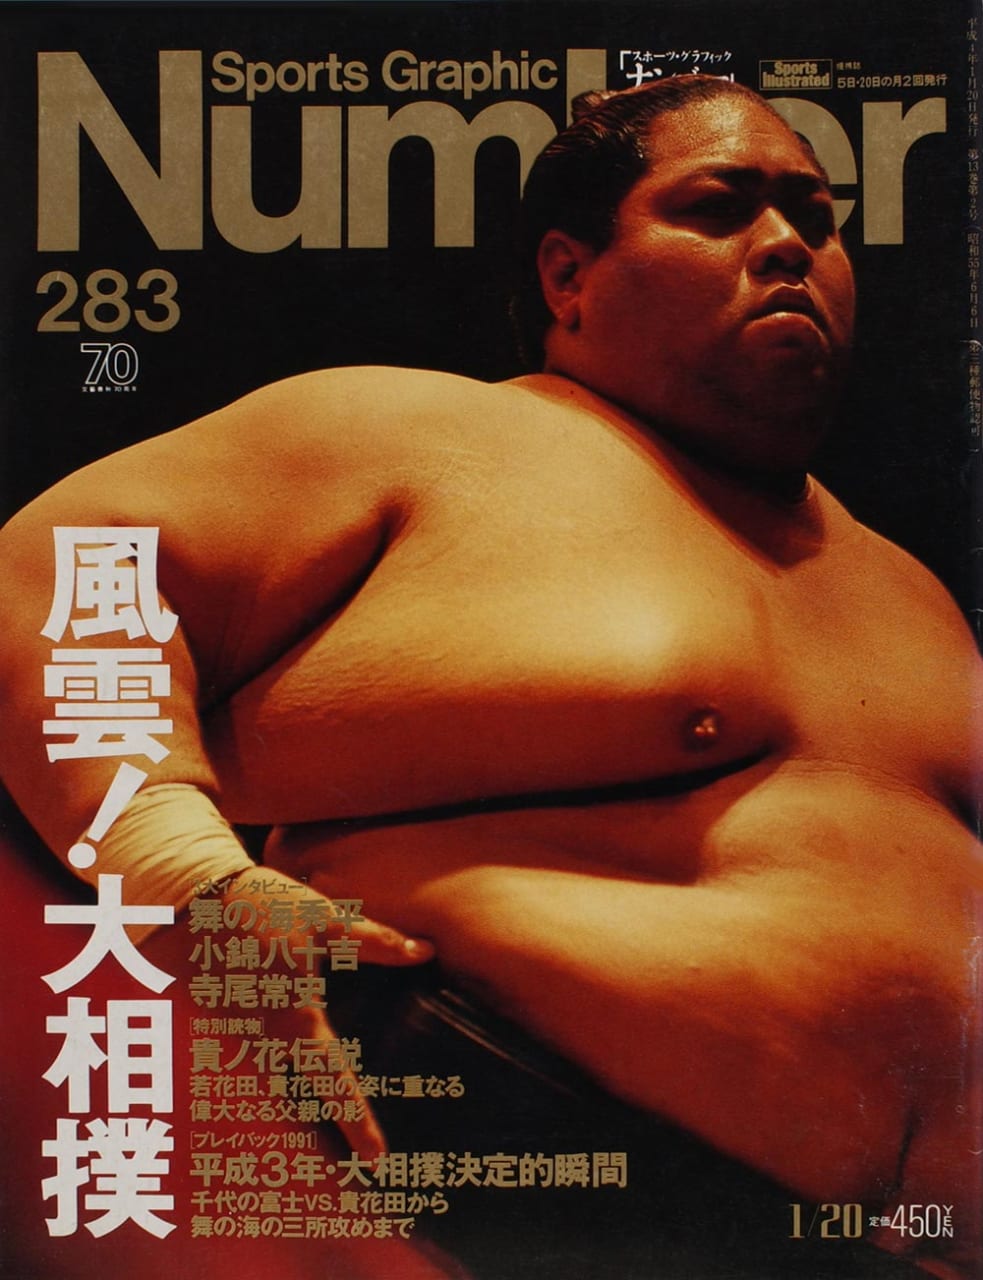 Sports Graphic Number 283号
1992年1月7日発売
表紙撮影：佐貫直哉